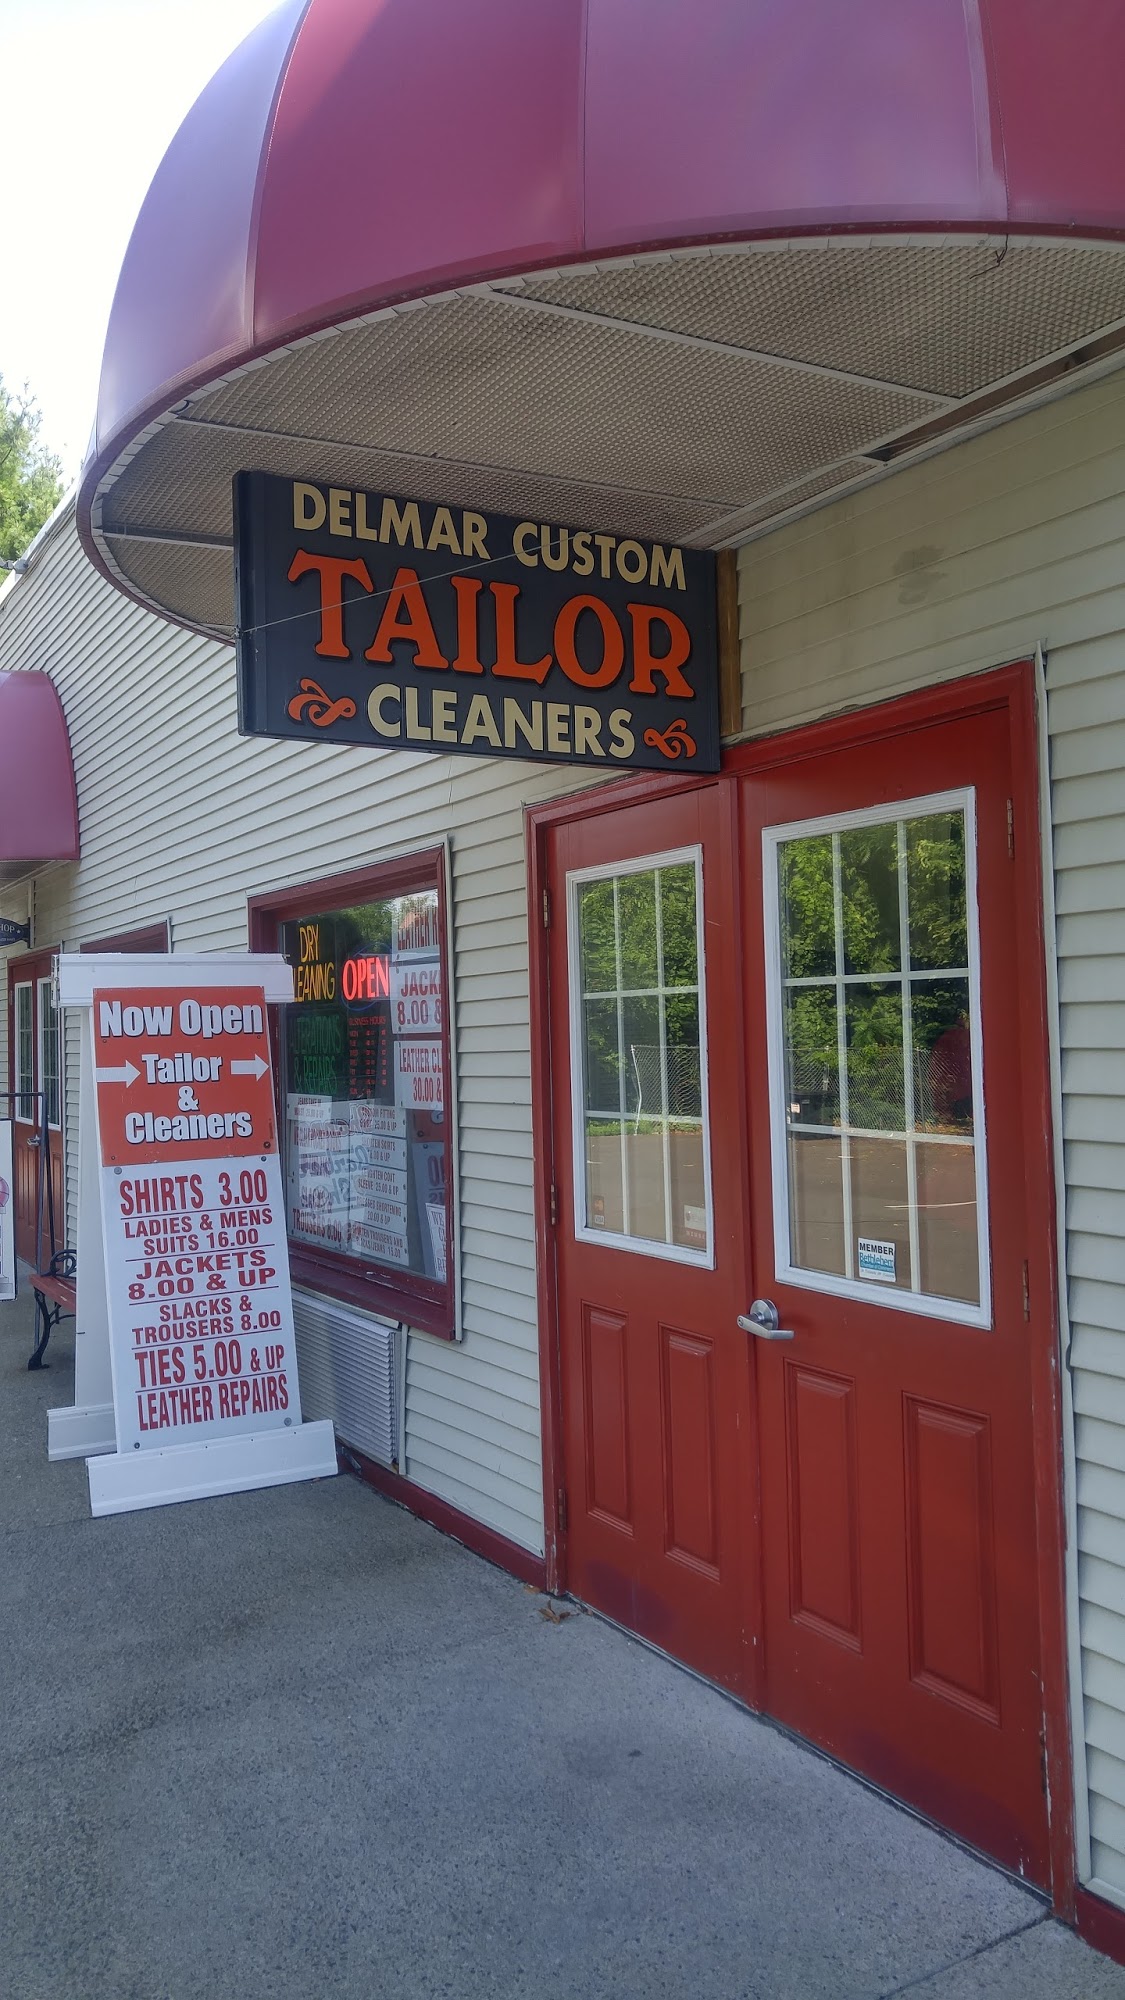 Delmar Custom Tailor & Cleaners